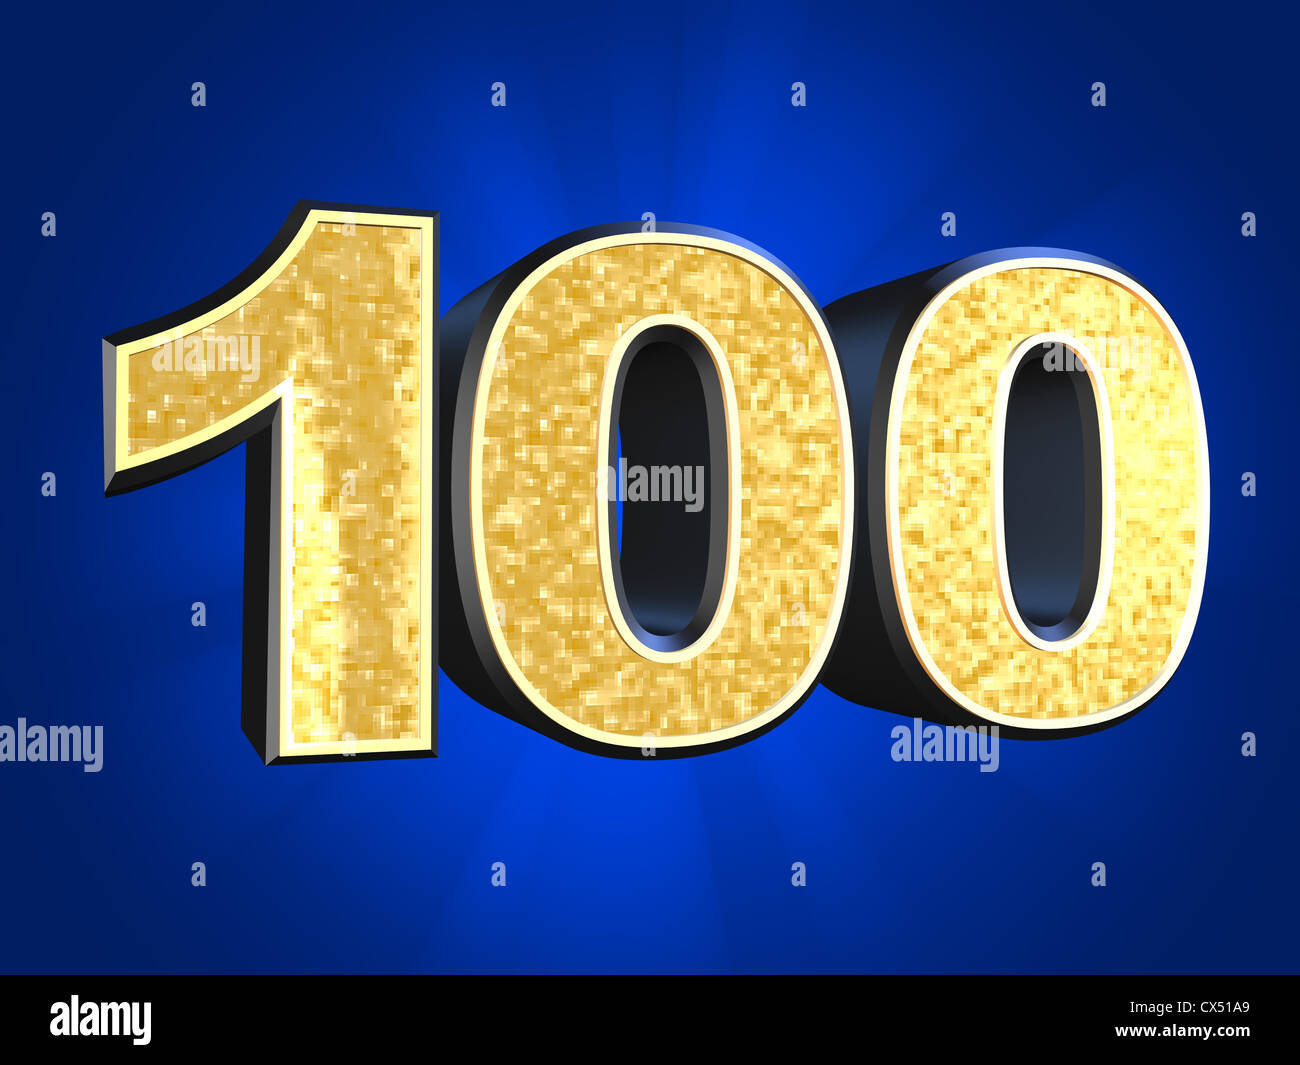 Golden number - 100 Stock Photo